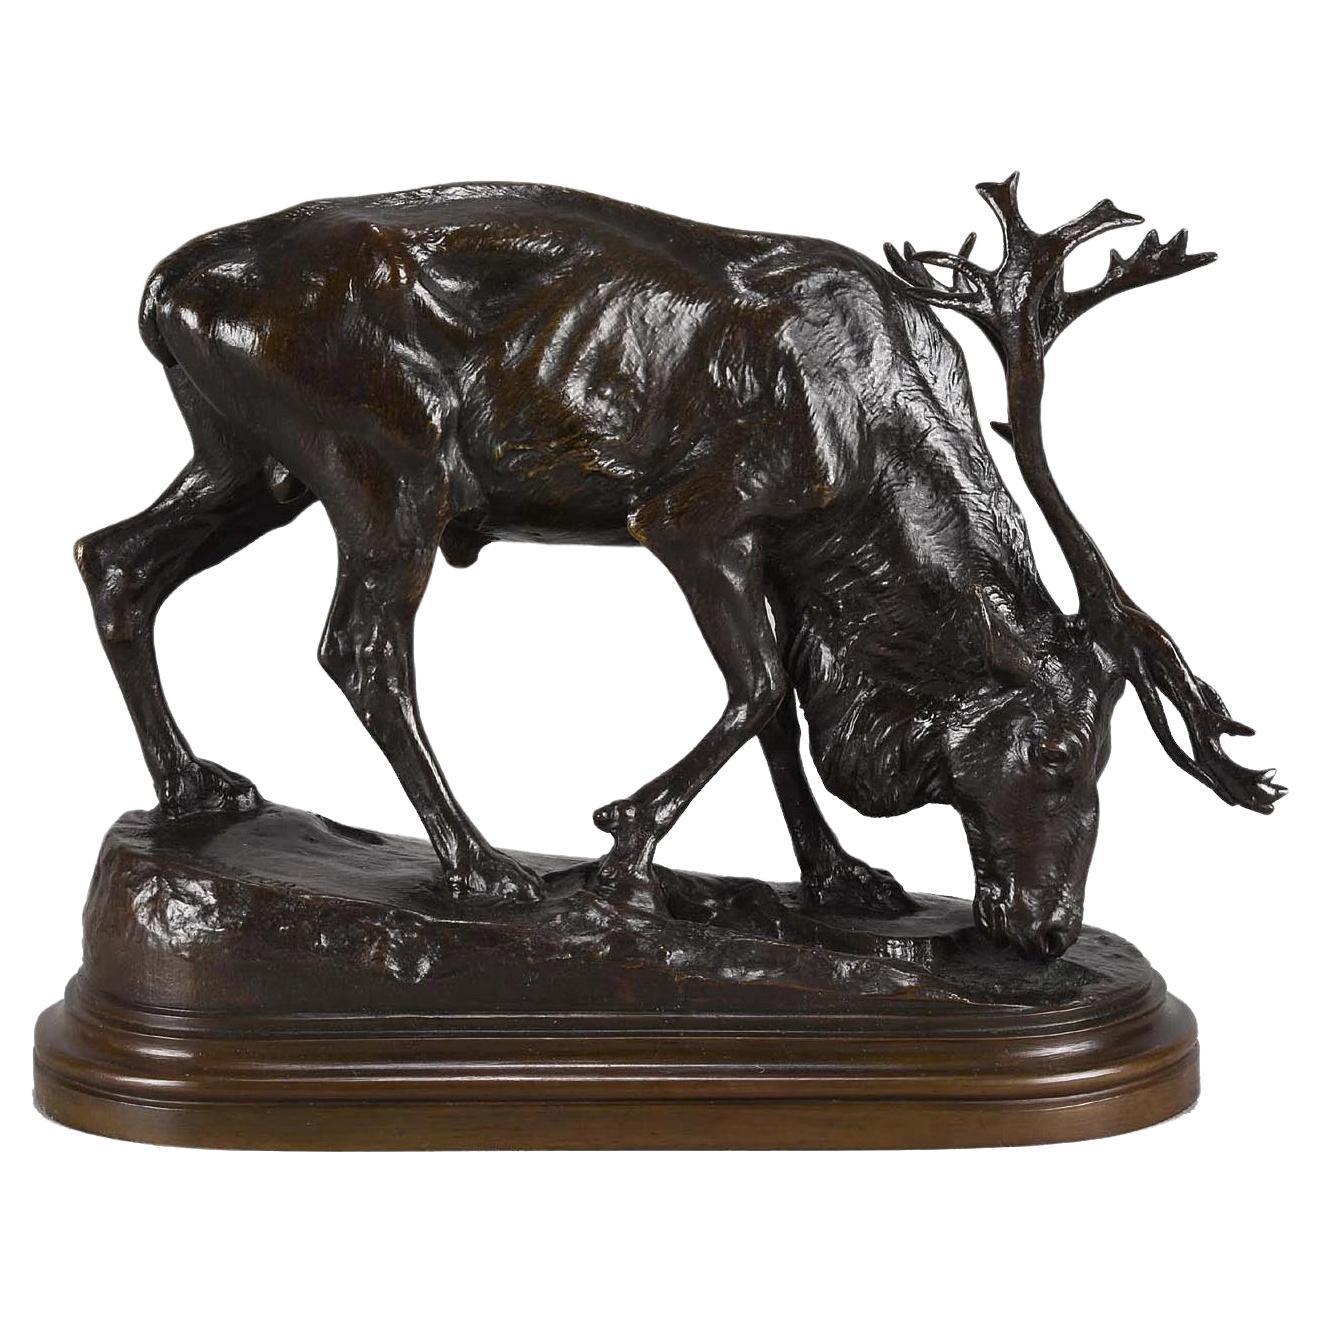 Escultura de bronce animalier del siglo XIX titulada "Reno" de Isidore Bonheur